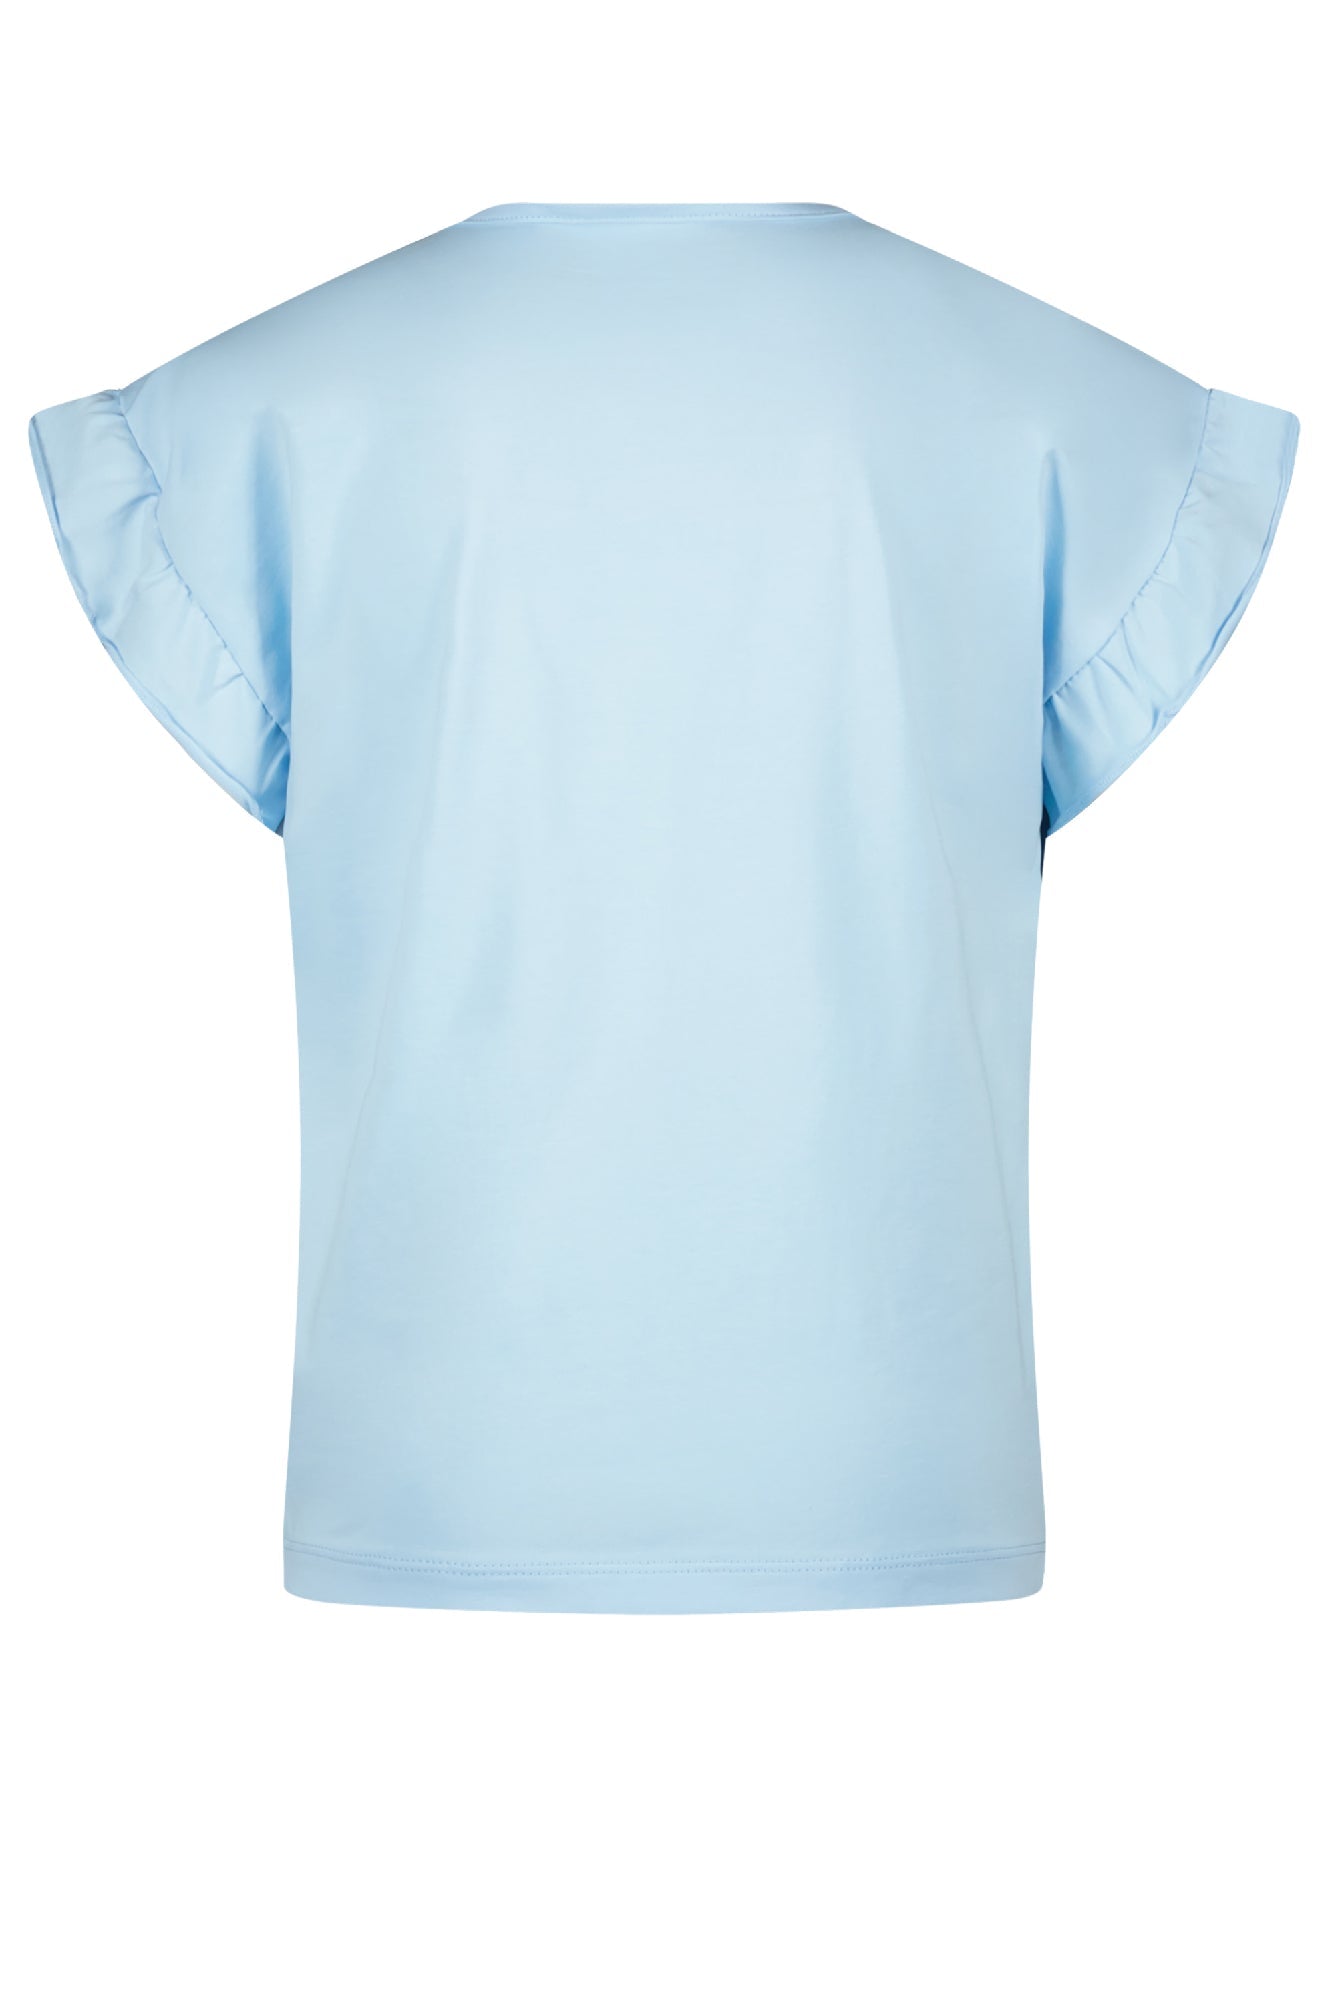 Meisjes Kanou tshirt short ruffled sleeve with Follow print van NoNo in de kleur Sky High in maat 134-140.